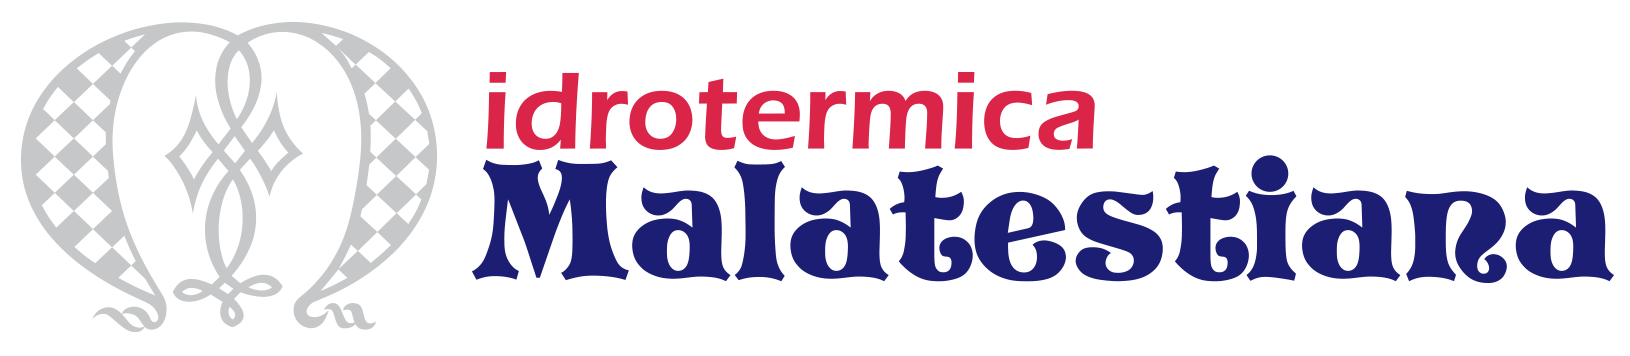 logo-idrotermica-malatestiana